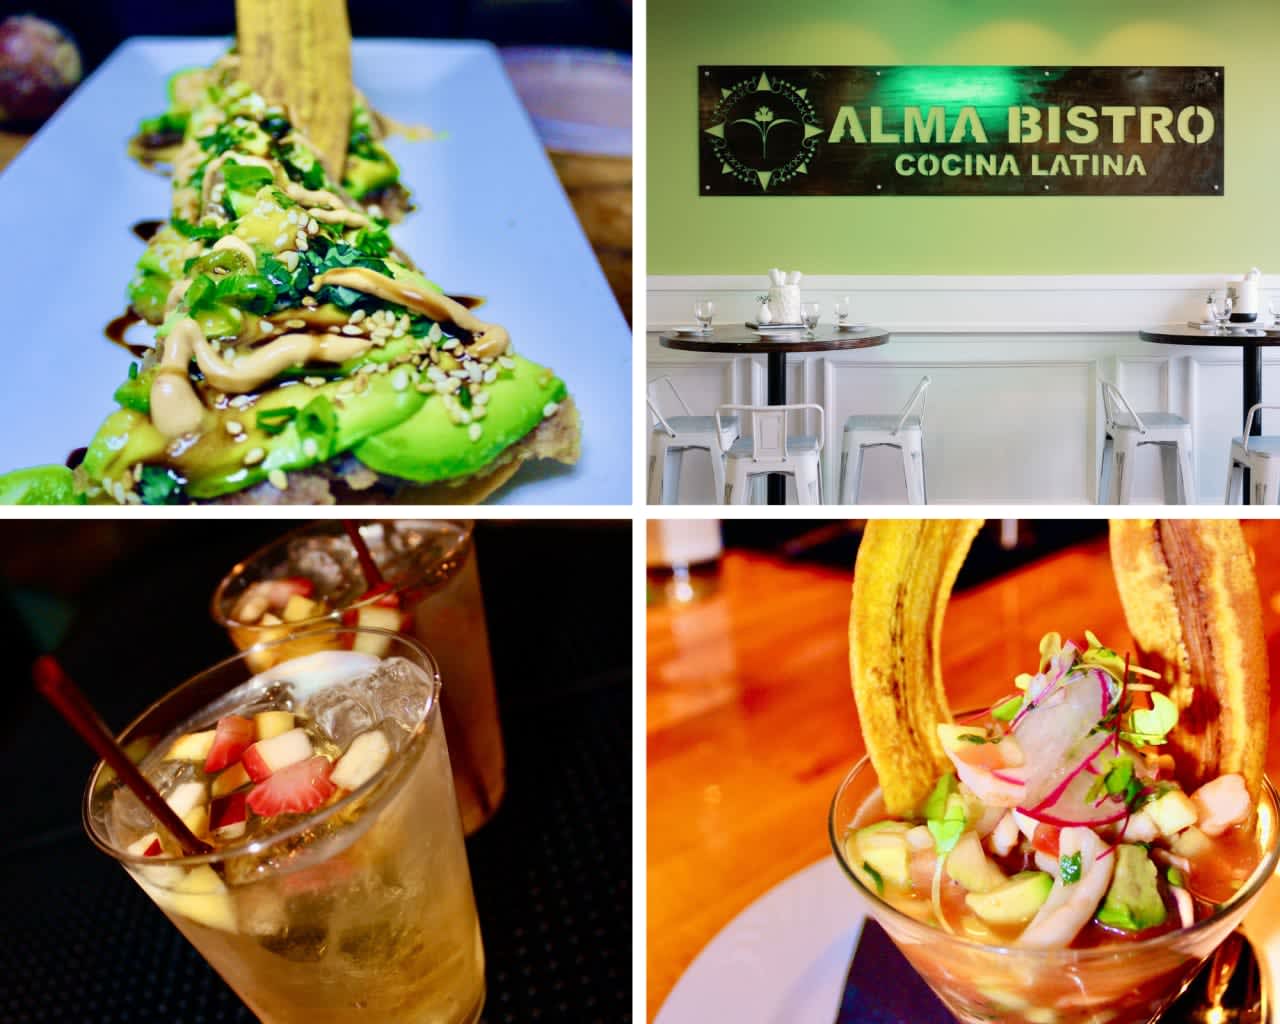 Alma Bistro opened in Norwalk on Monday, Oct. 31.